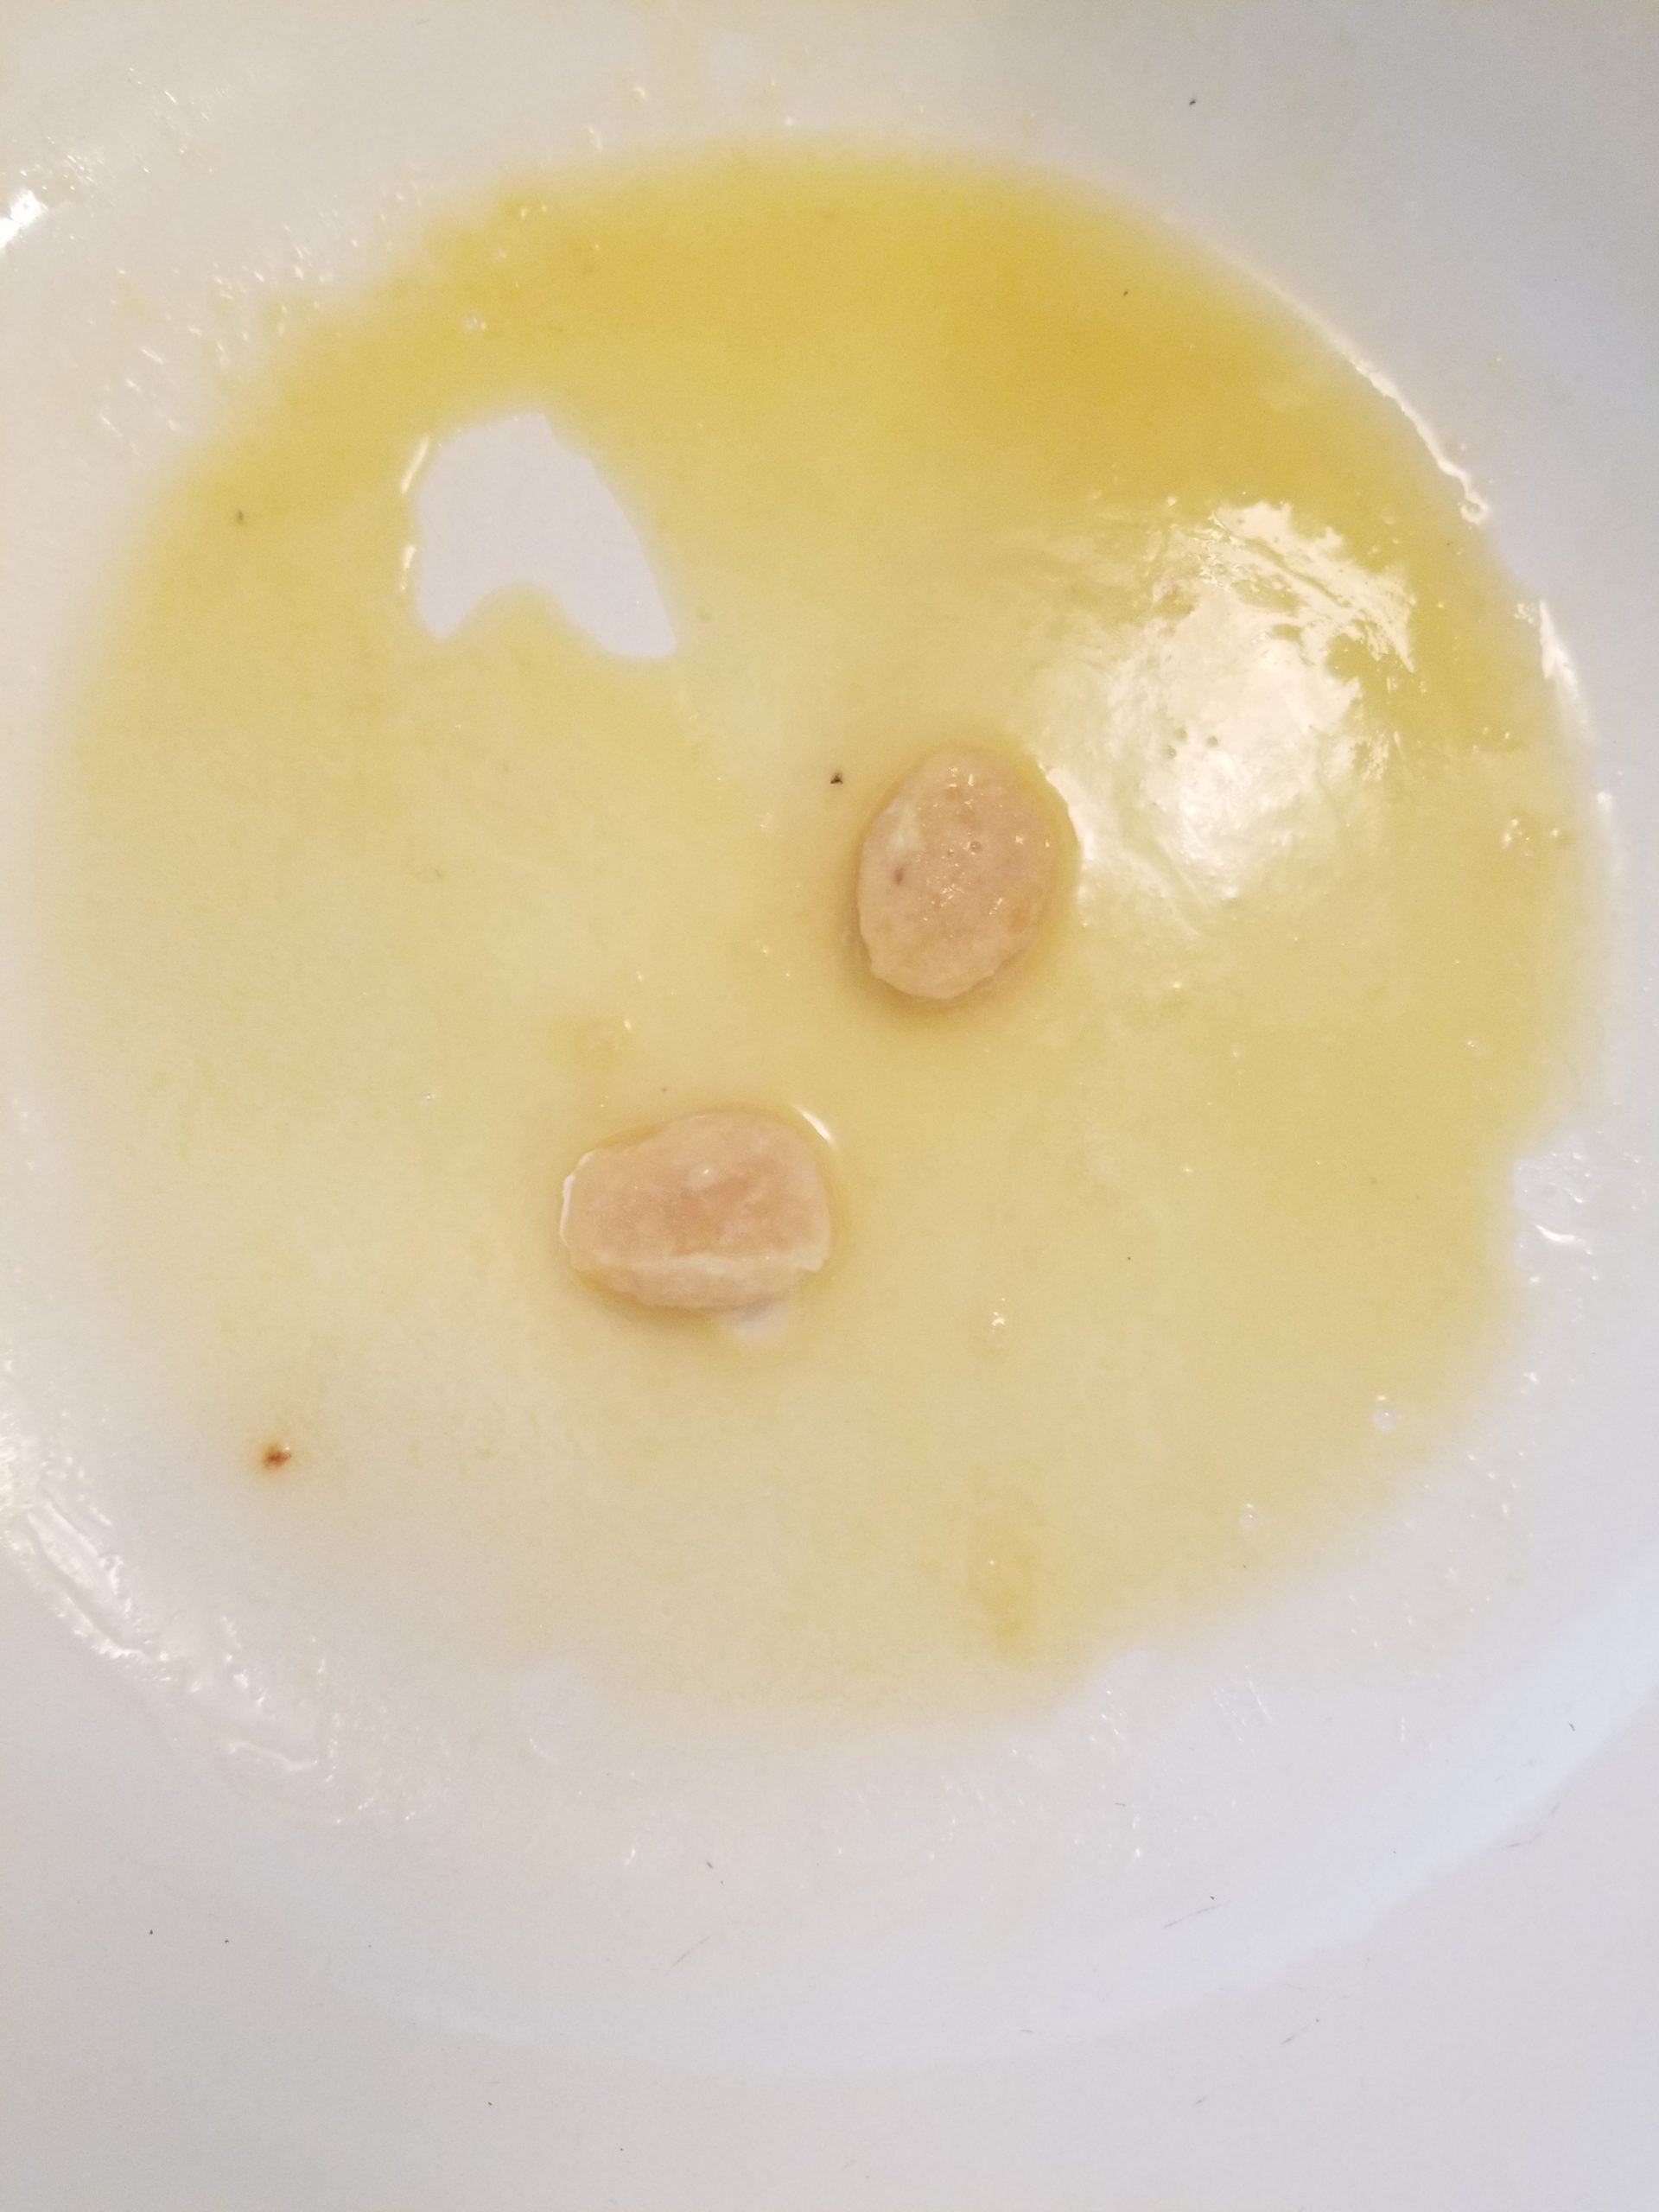 Frozen crushed garlic in melted vegan butter